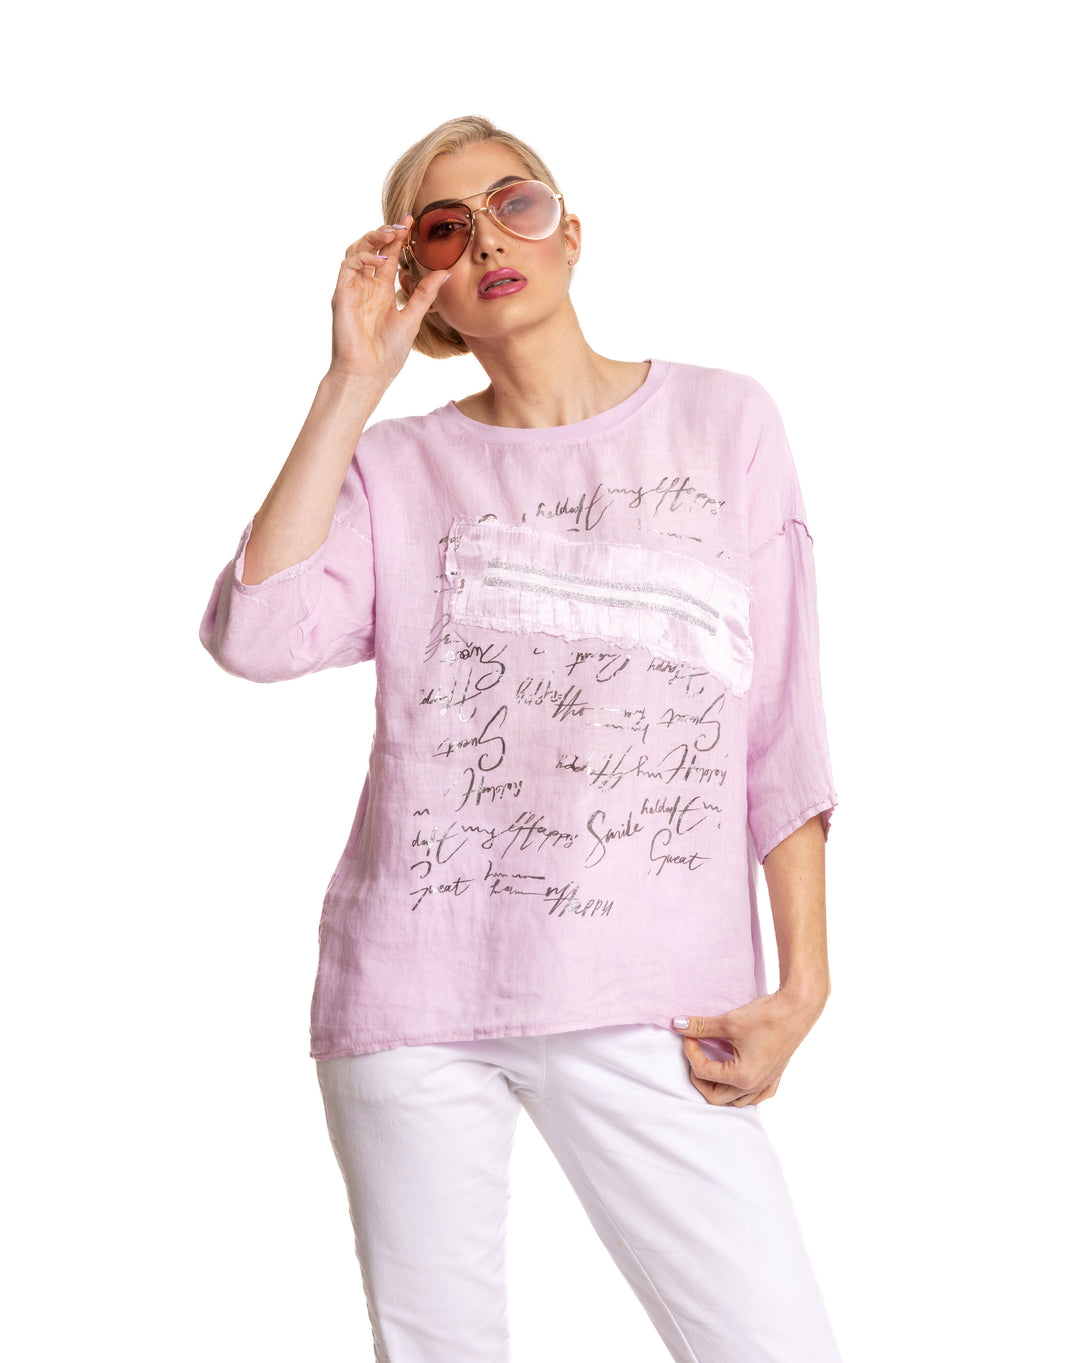 Lia Top in Petal Pink - Imagine Fashion